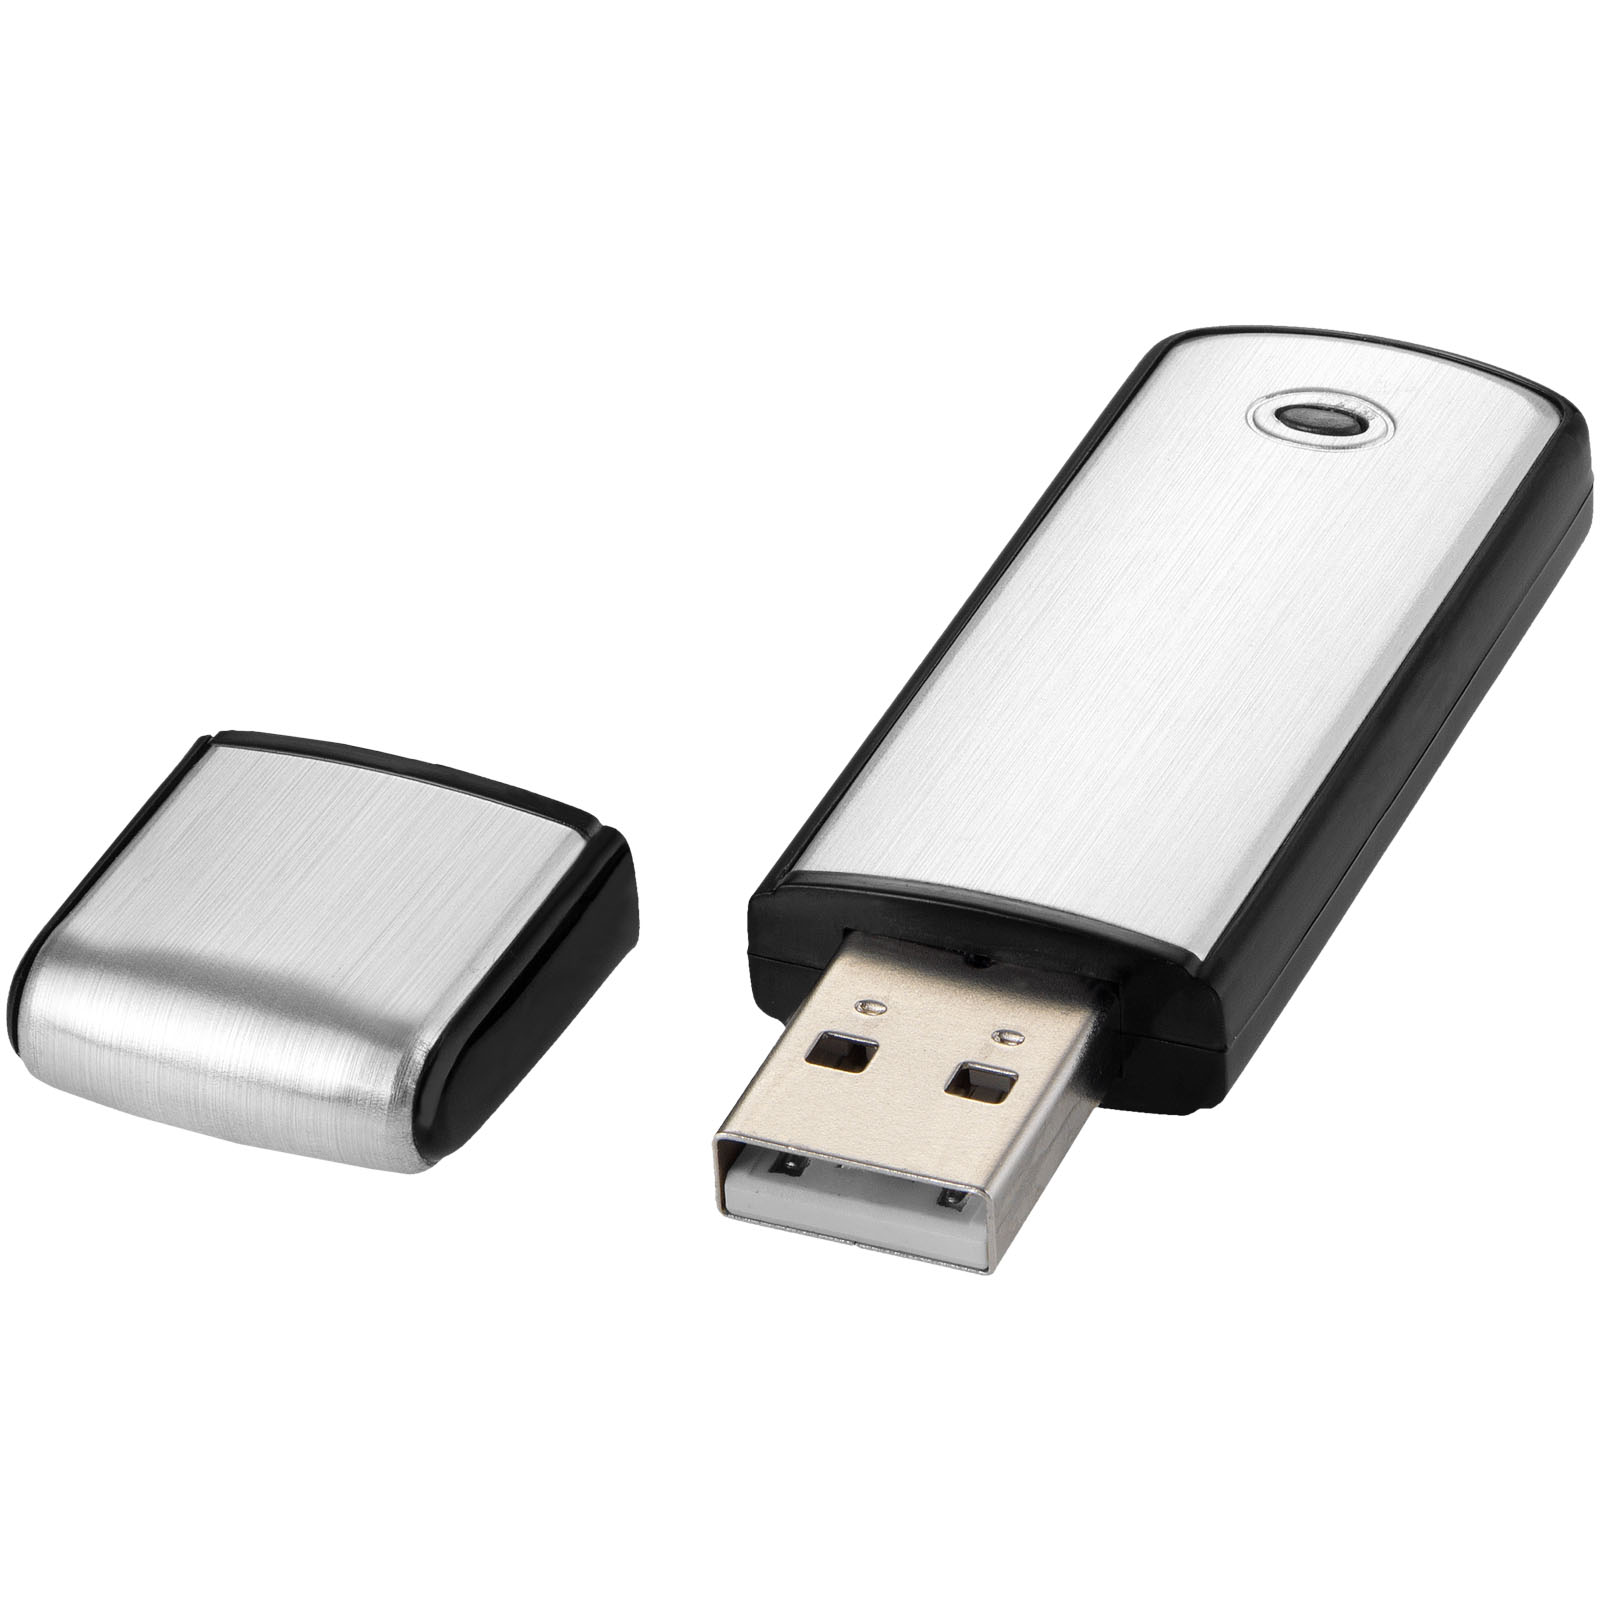 Clé USB carrée - Perpezac-le-Blanc - Zaprinta France